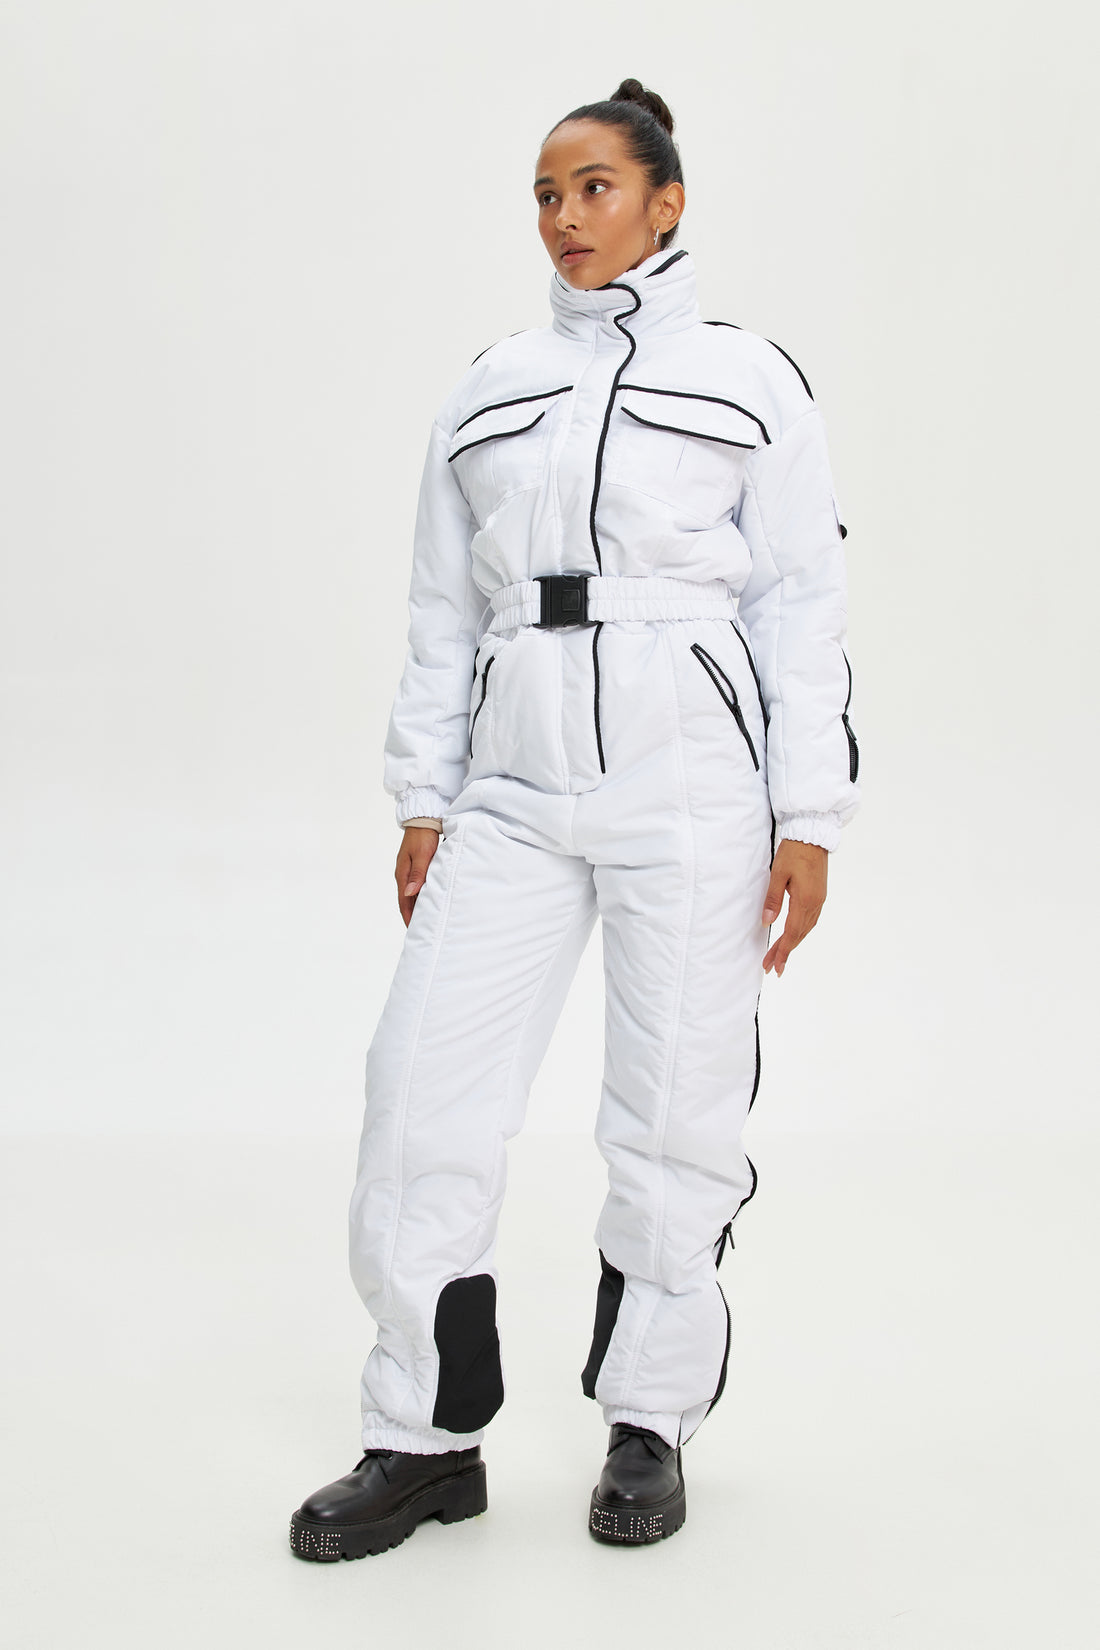 White ski suit BLANC - WHITE with black edging - Ladies ski wear snowsuit